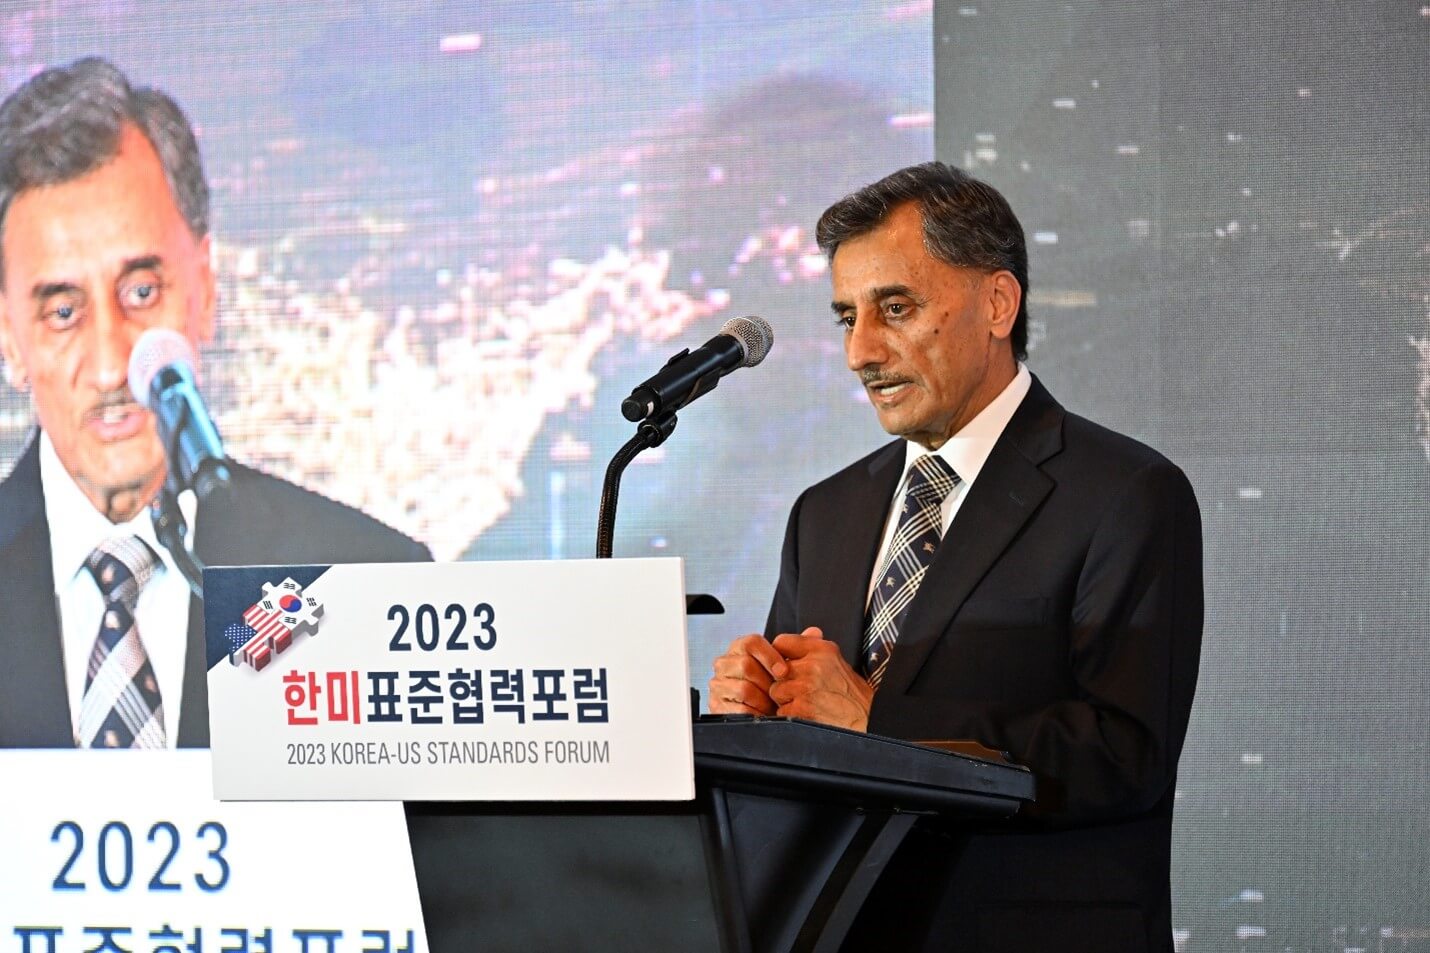 Joe Bhatia at the 2023 Korea-U.S. Standards Forum